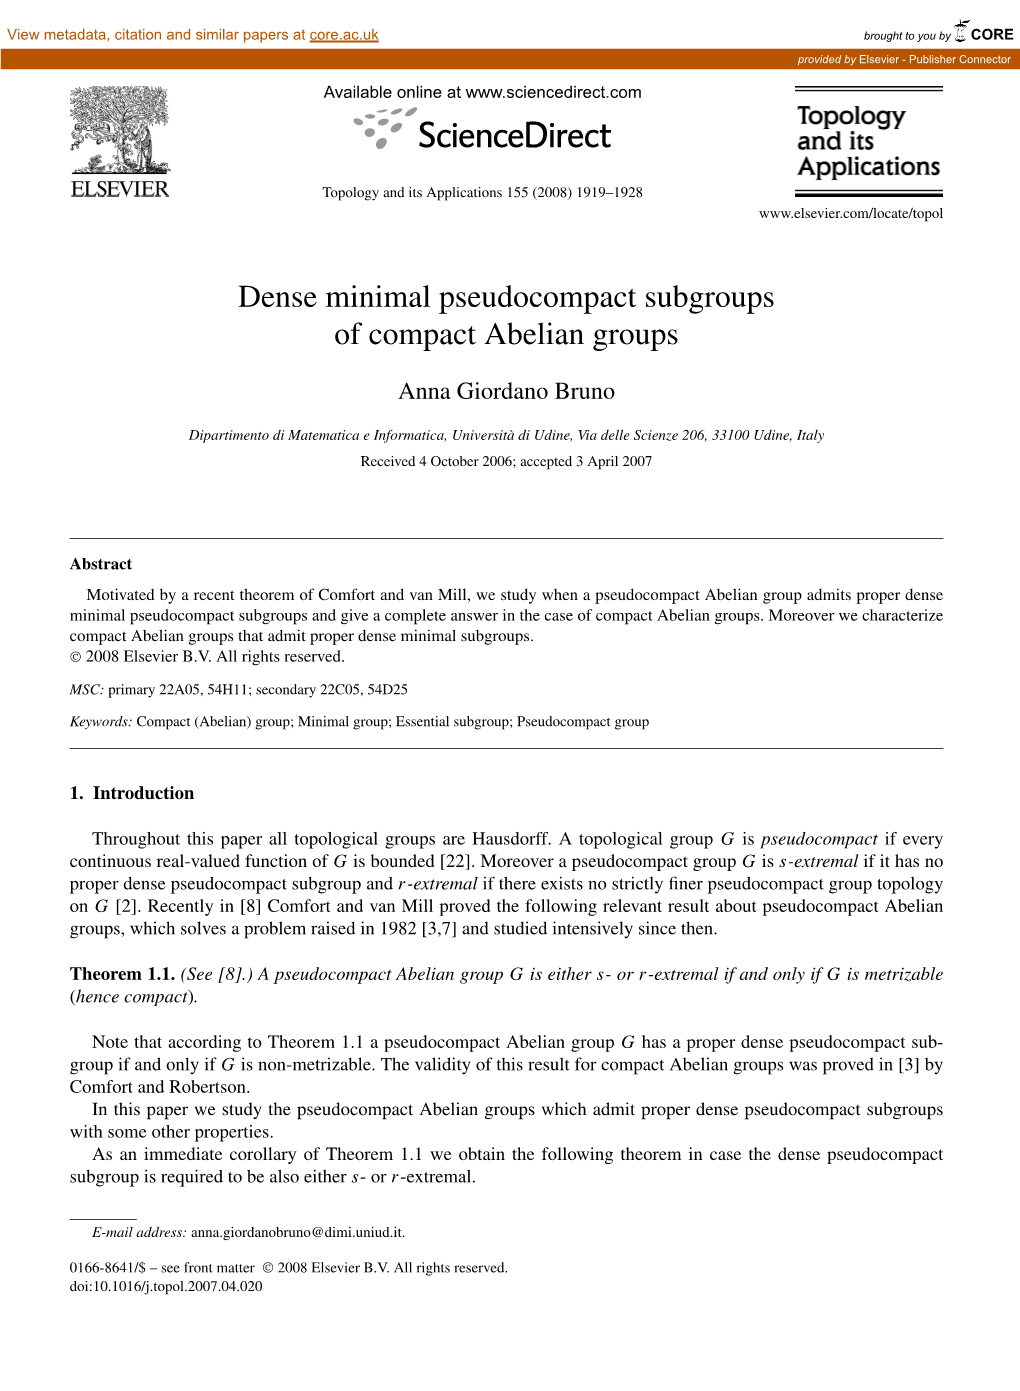 Dense Minimal Pseudocompact Subgroups of Compact Abelian Groups